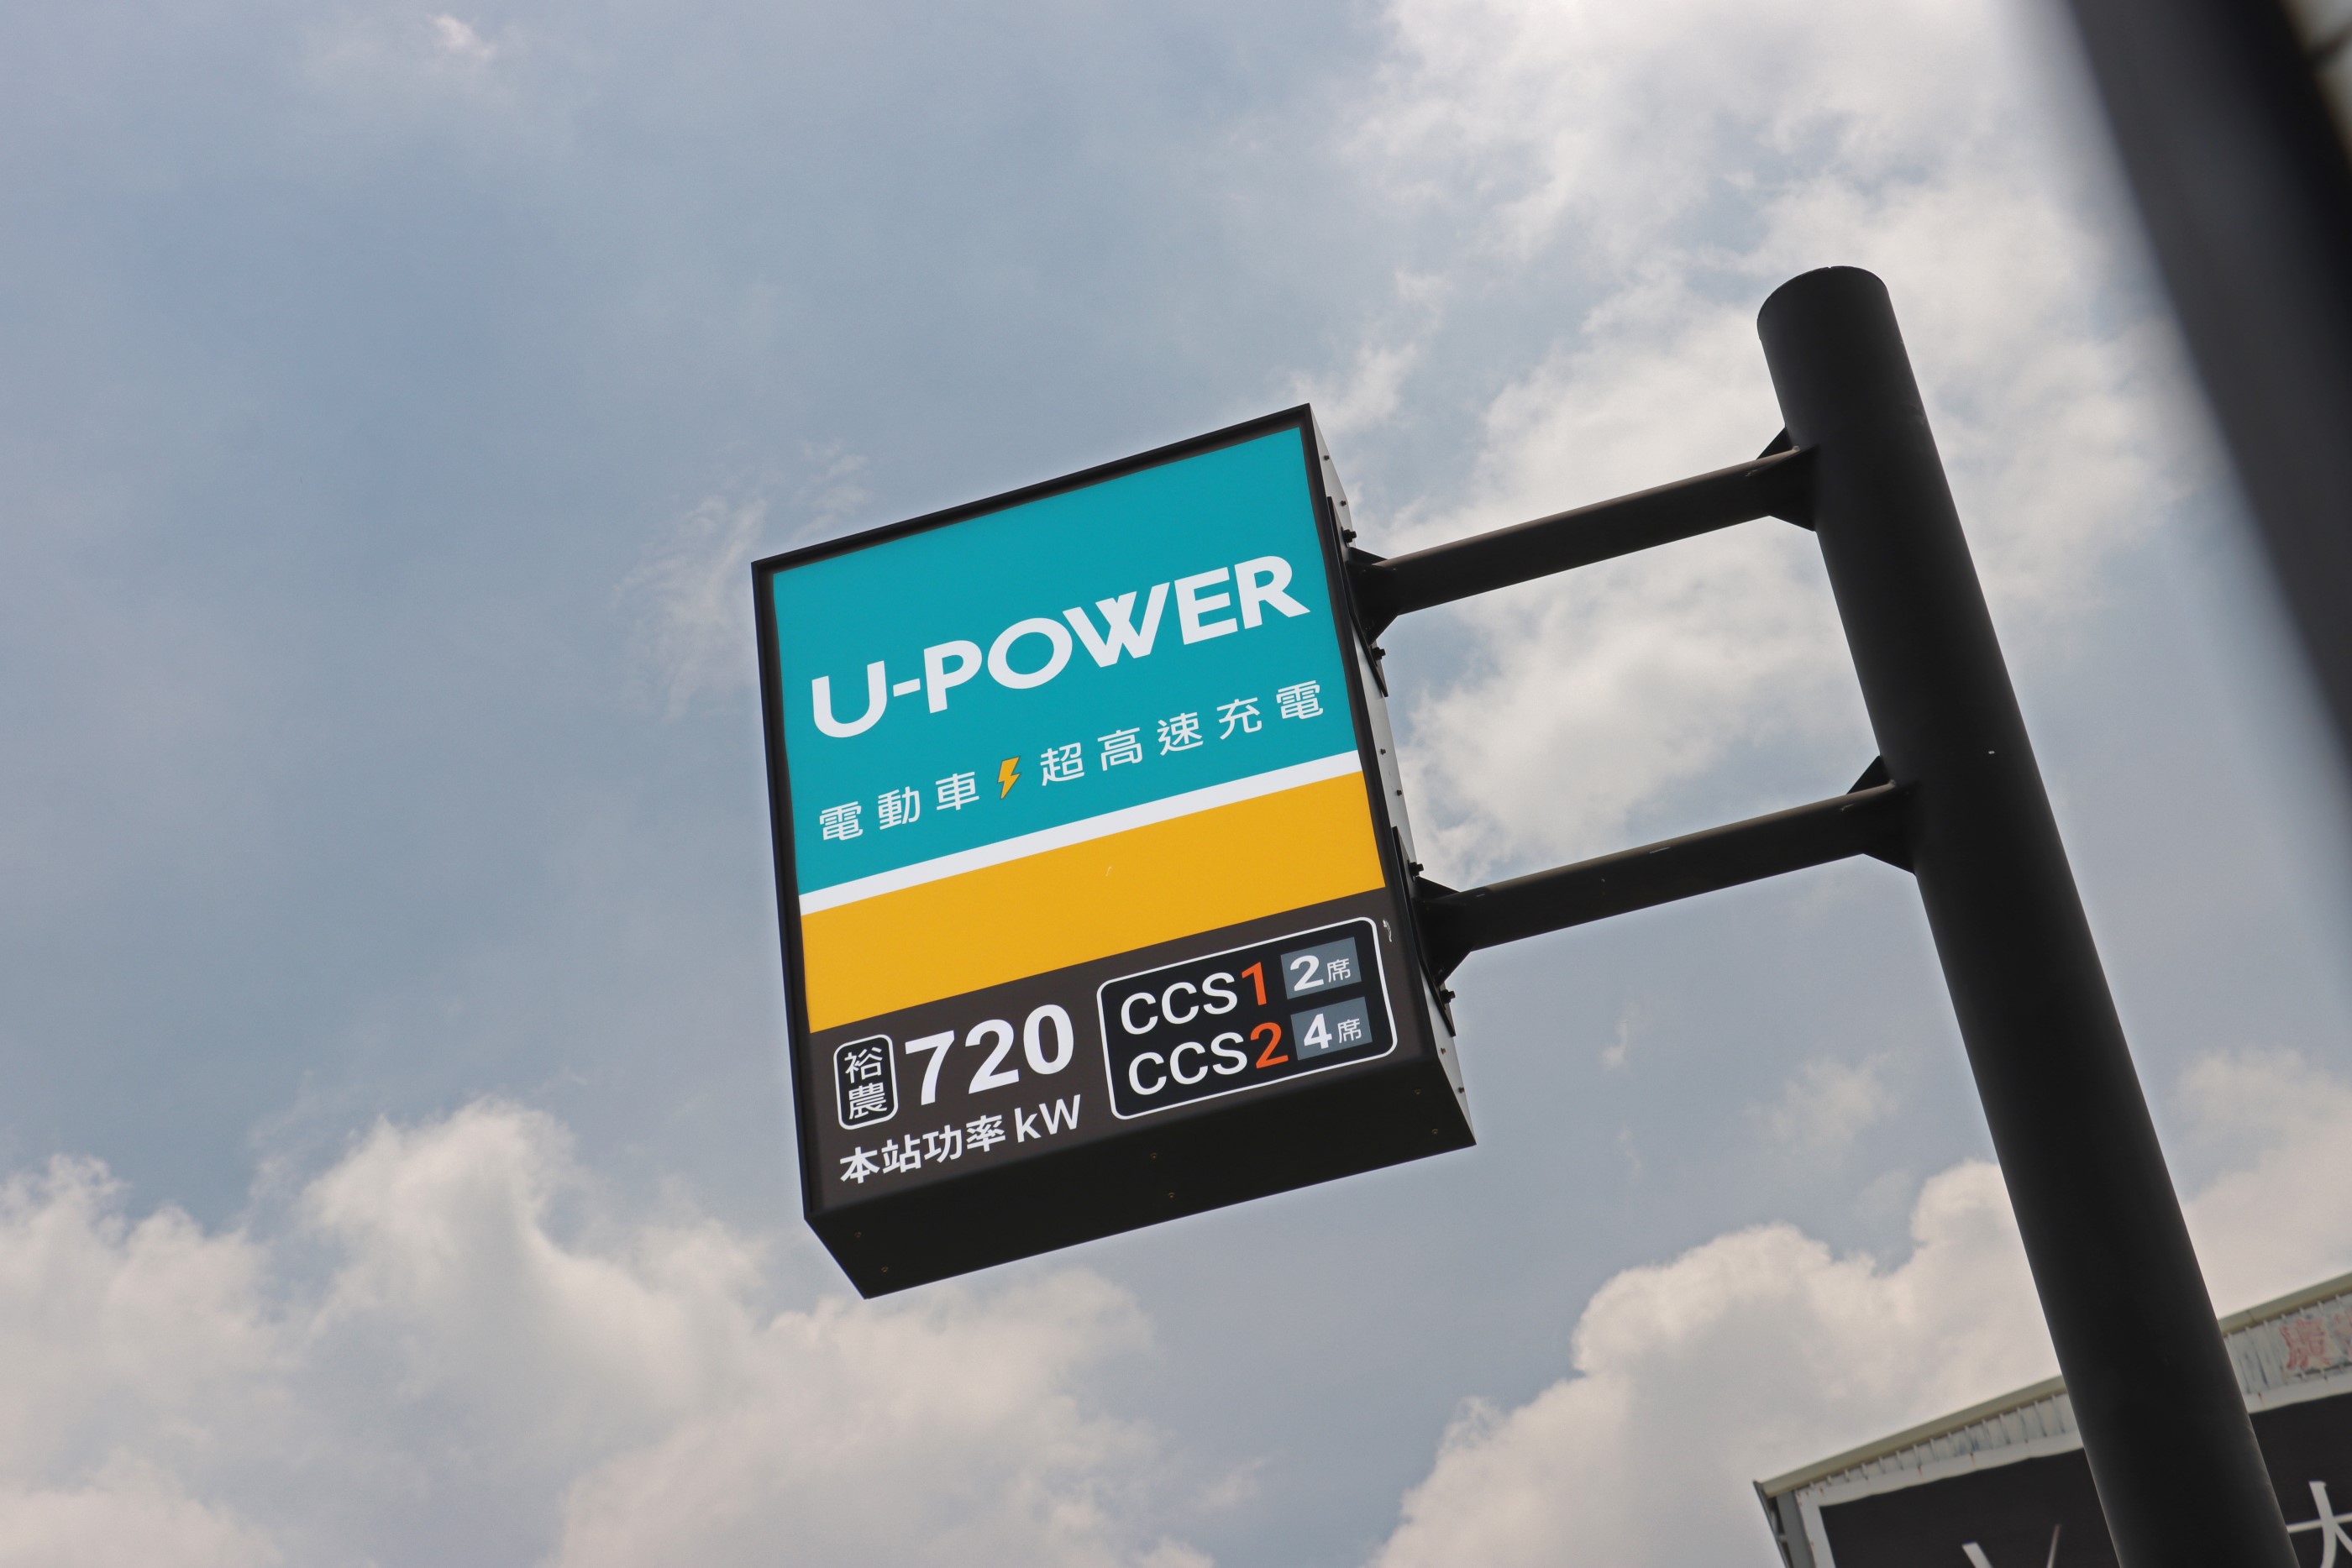 U-POWER 超高速充電站五星頂級服務體驗大解密臺南裕農站首創業界最高720 kW功率